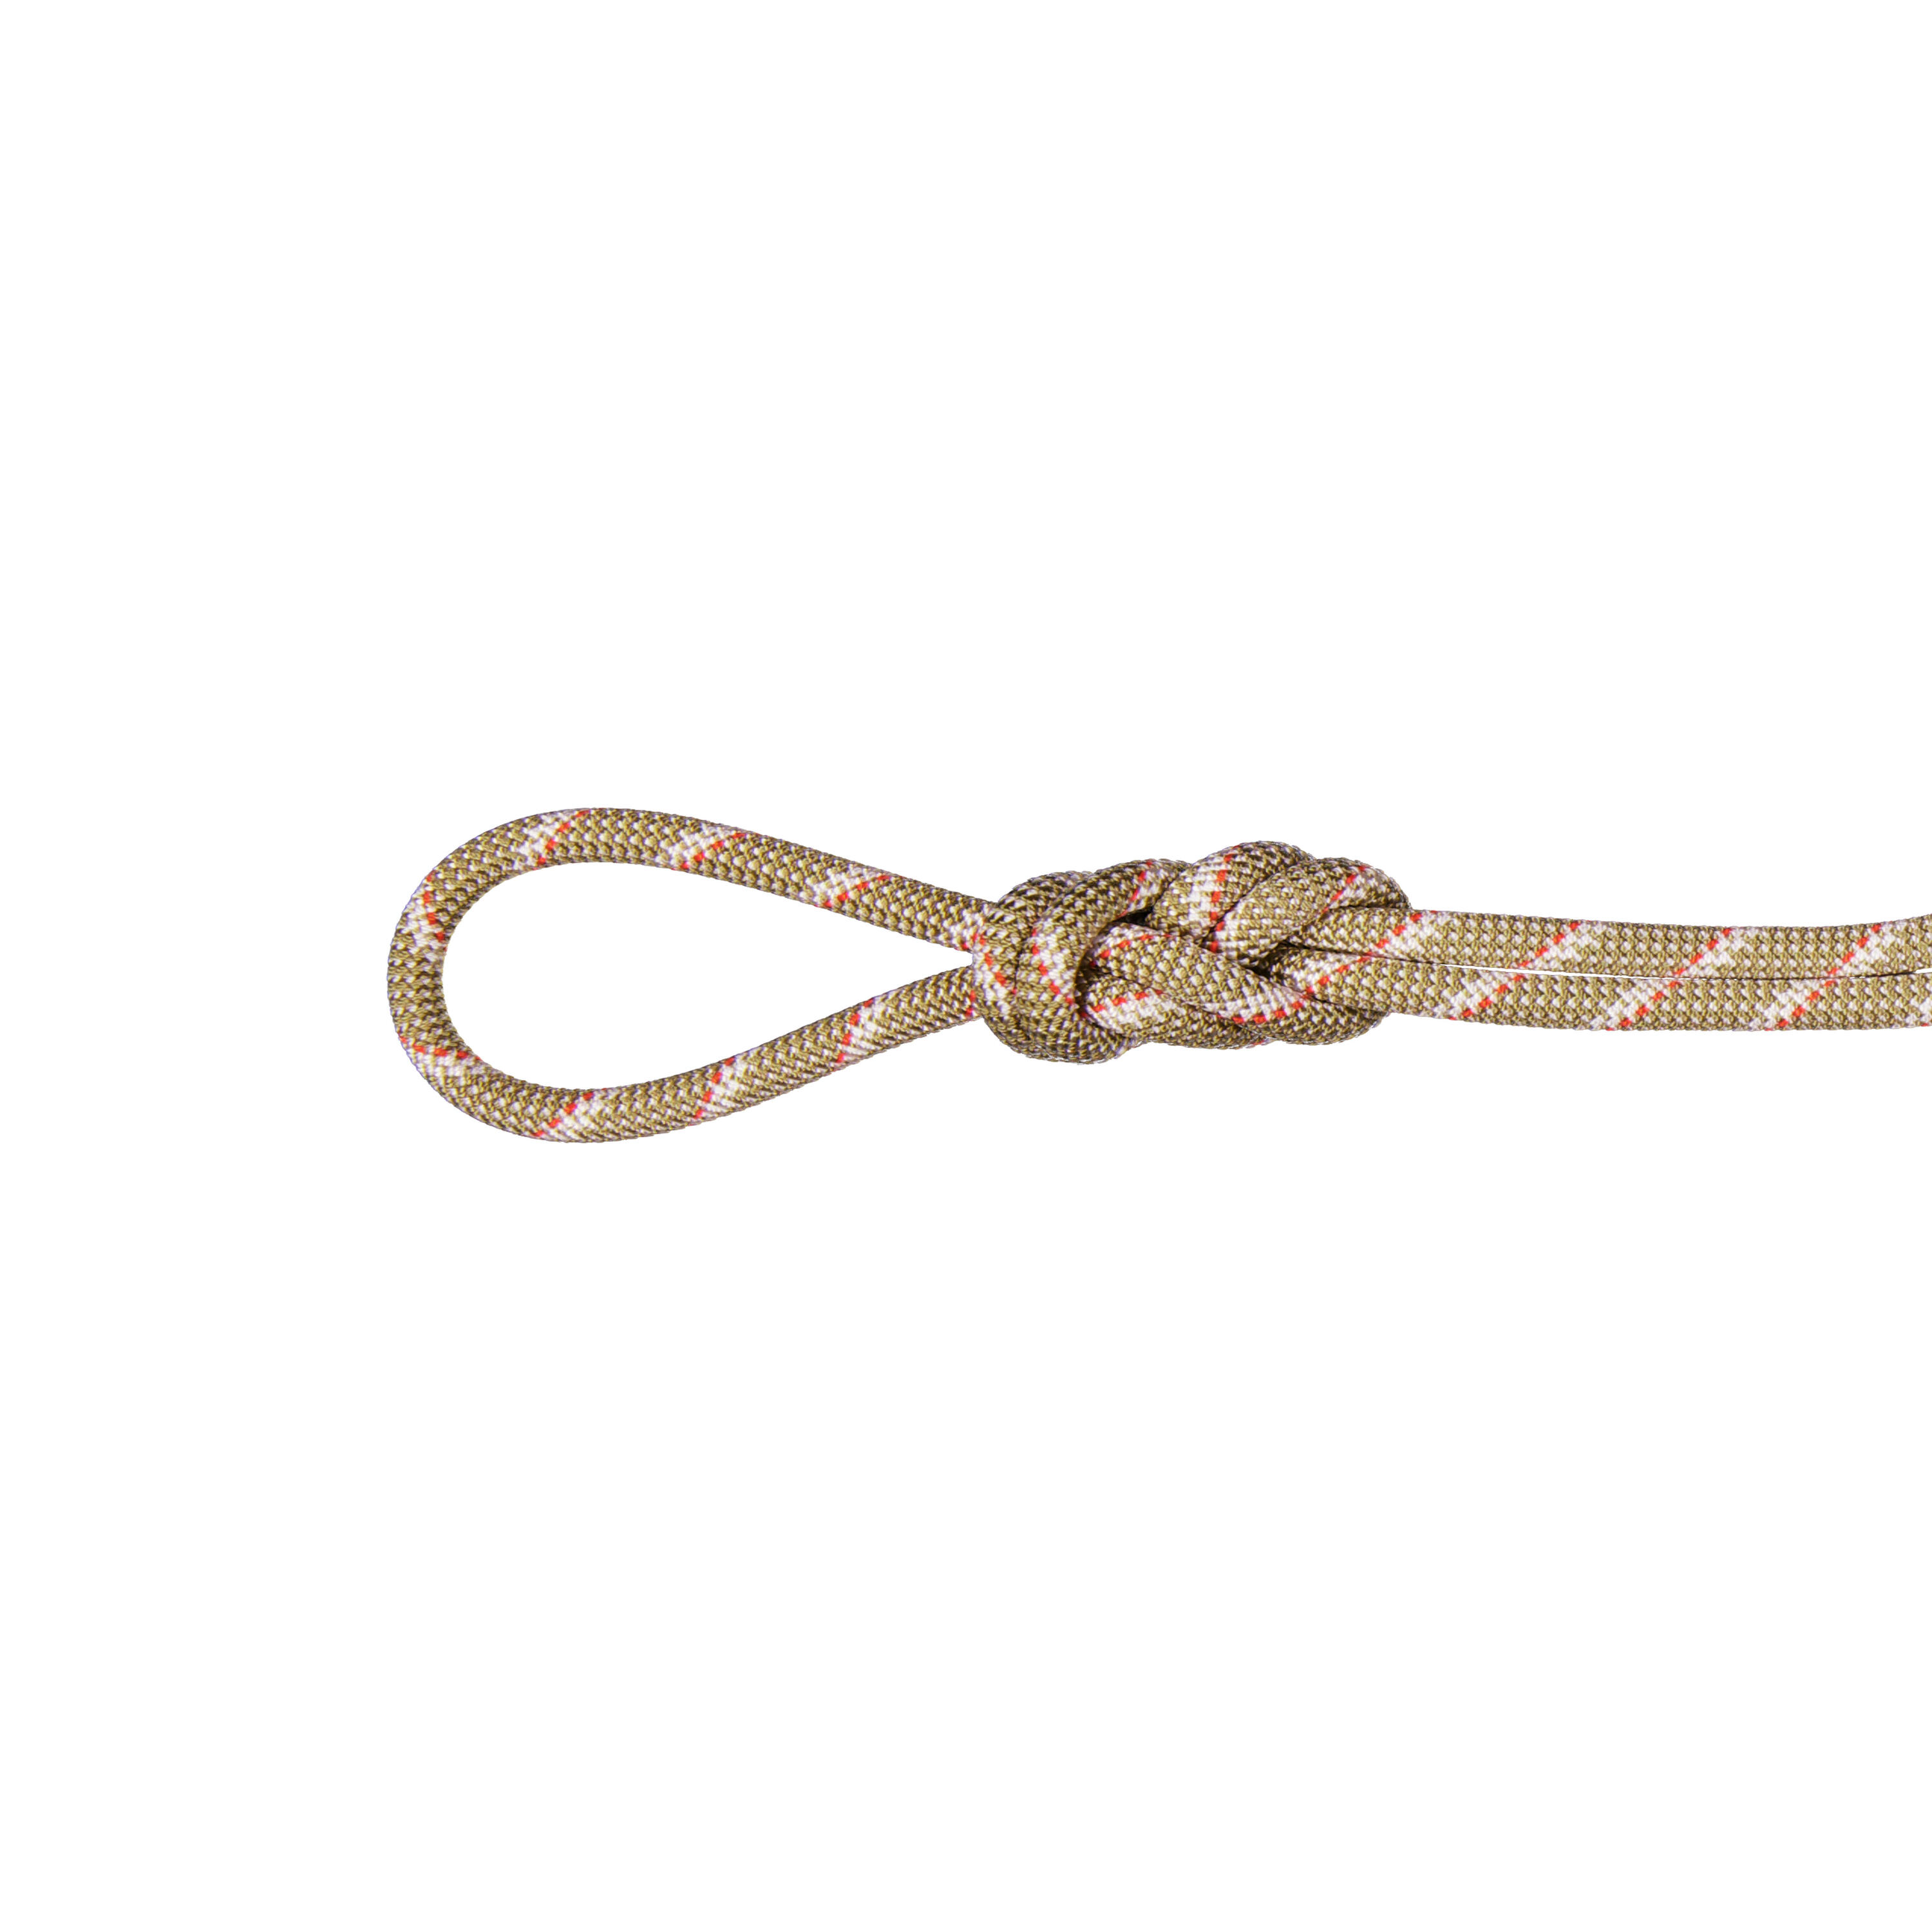 MAMMUT Alpine Classic Half Rope 8.0 mm x 50m - Green